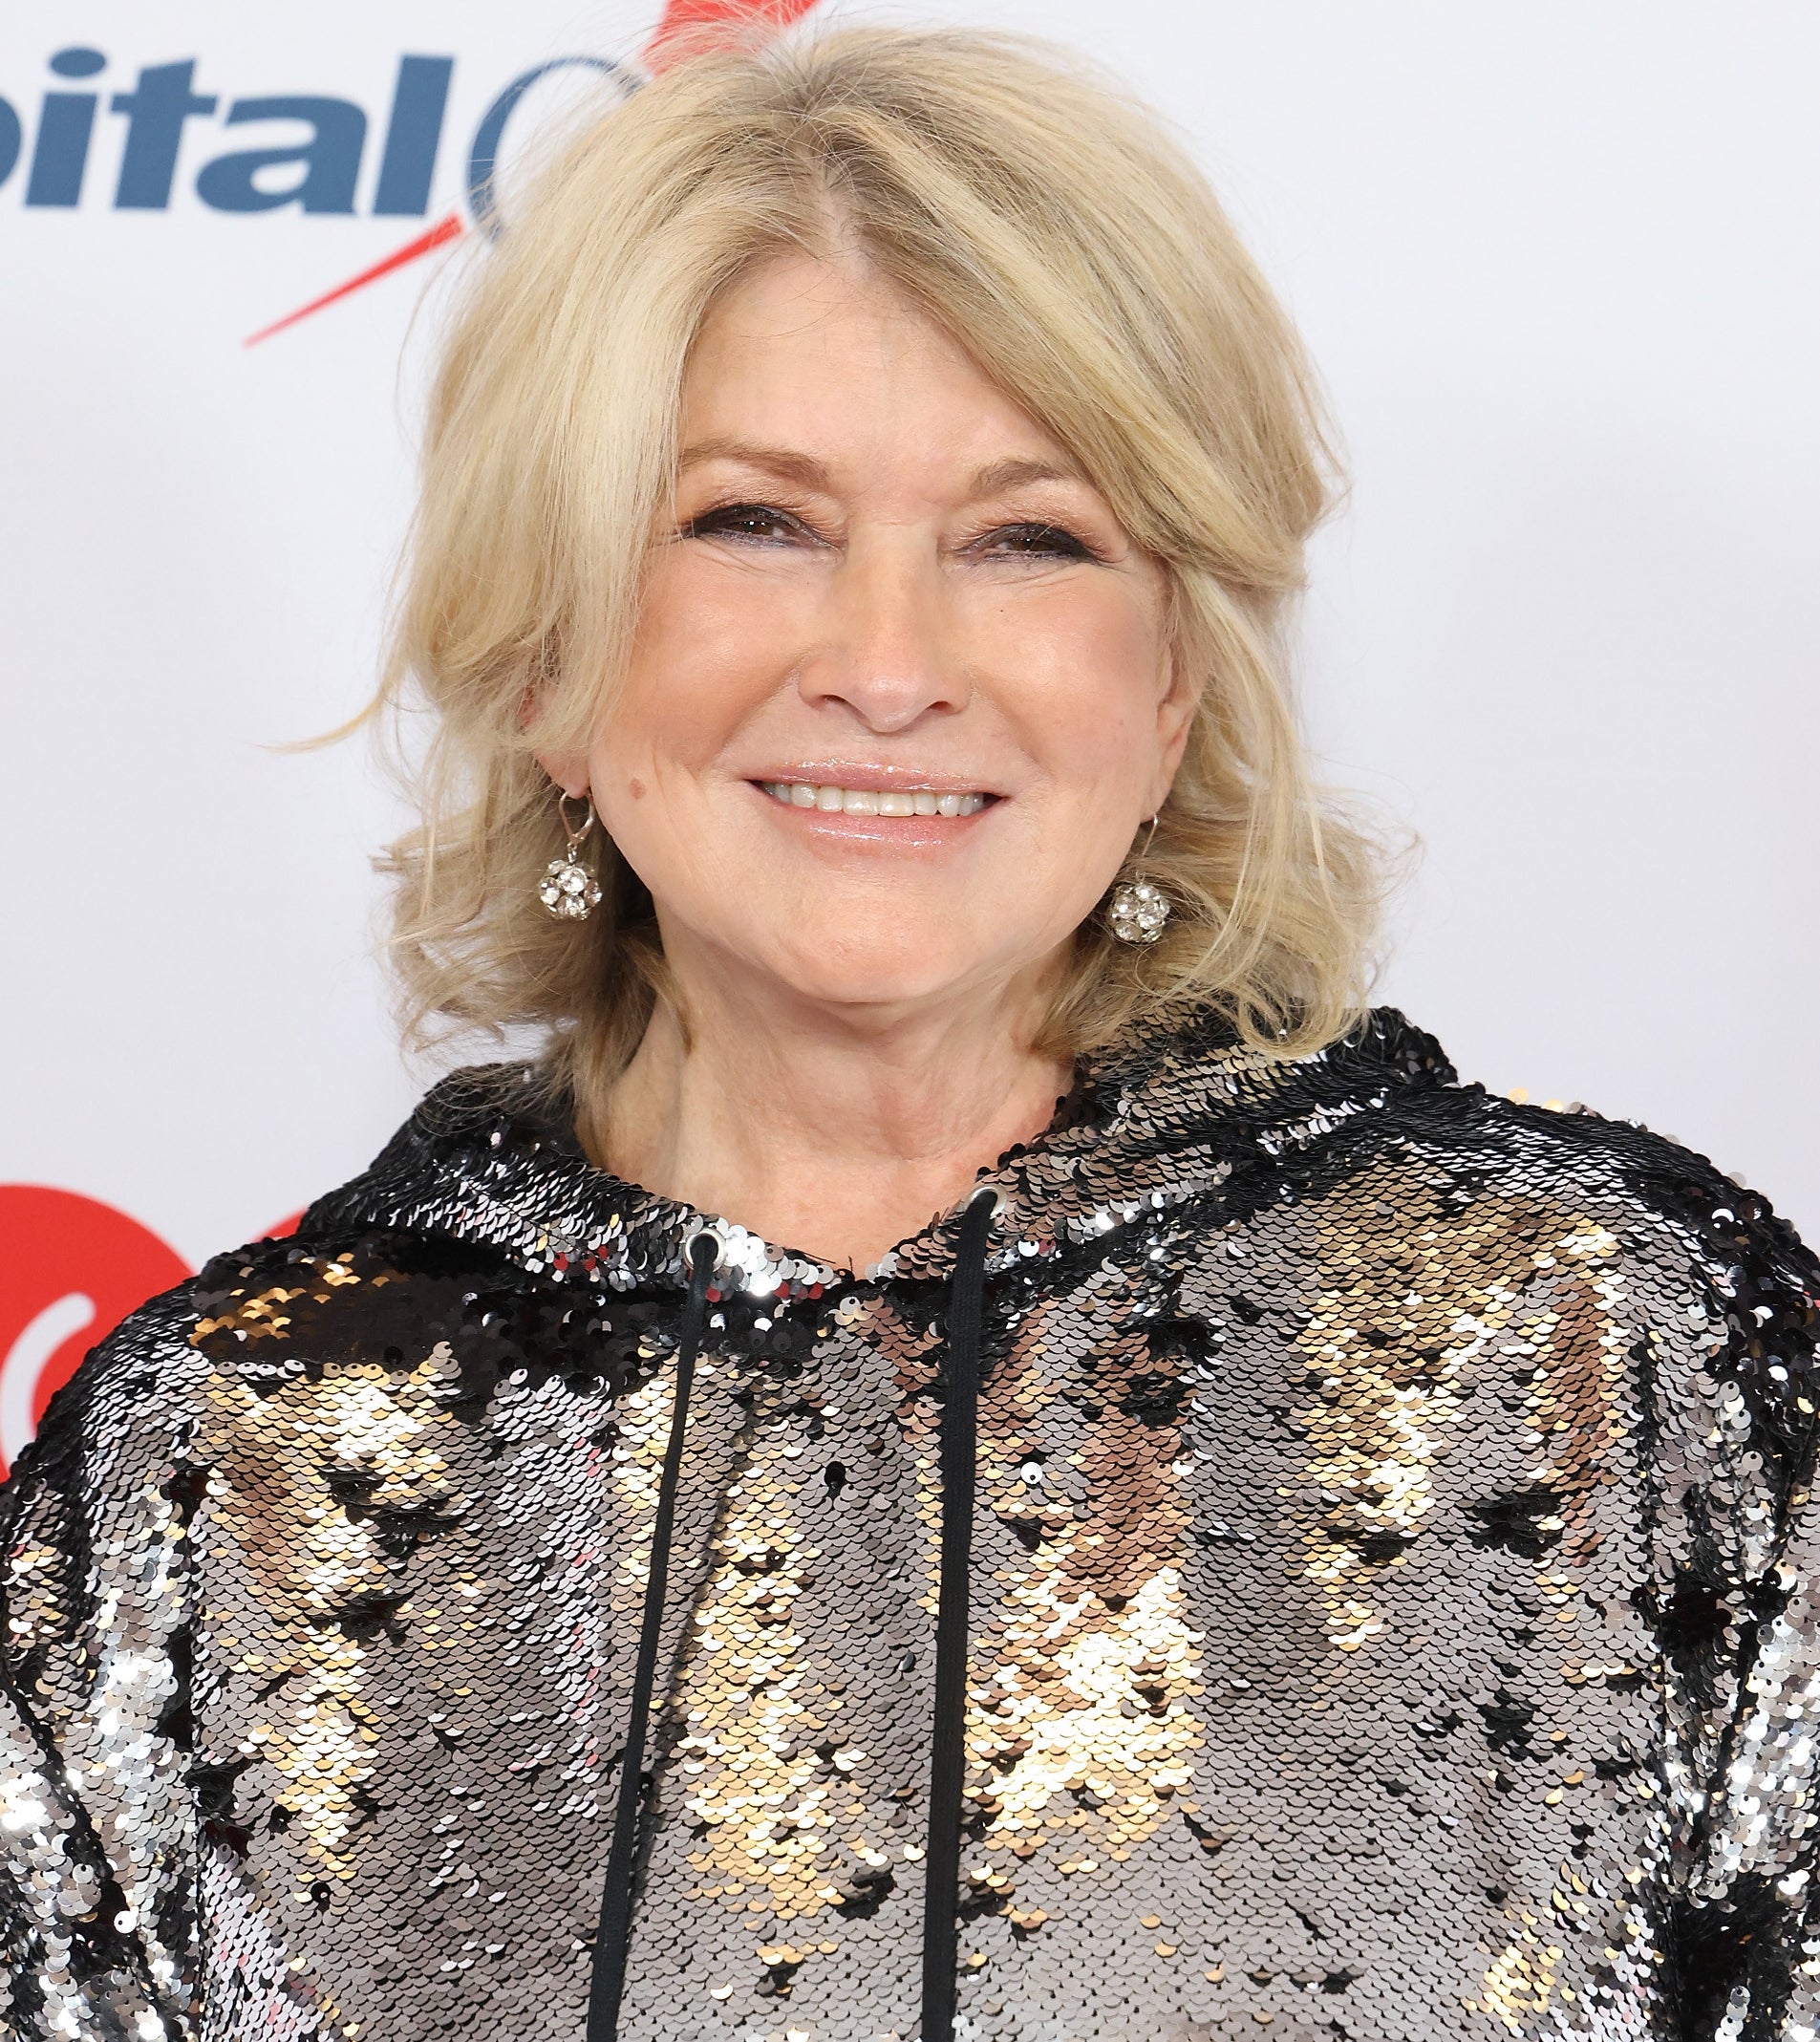 Martha Stewart smiling in an entirely sequined sweatshirt